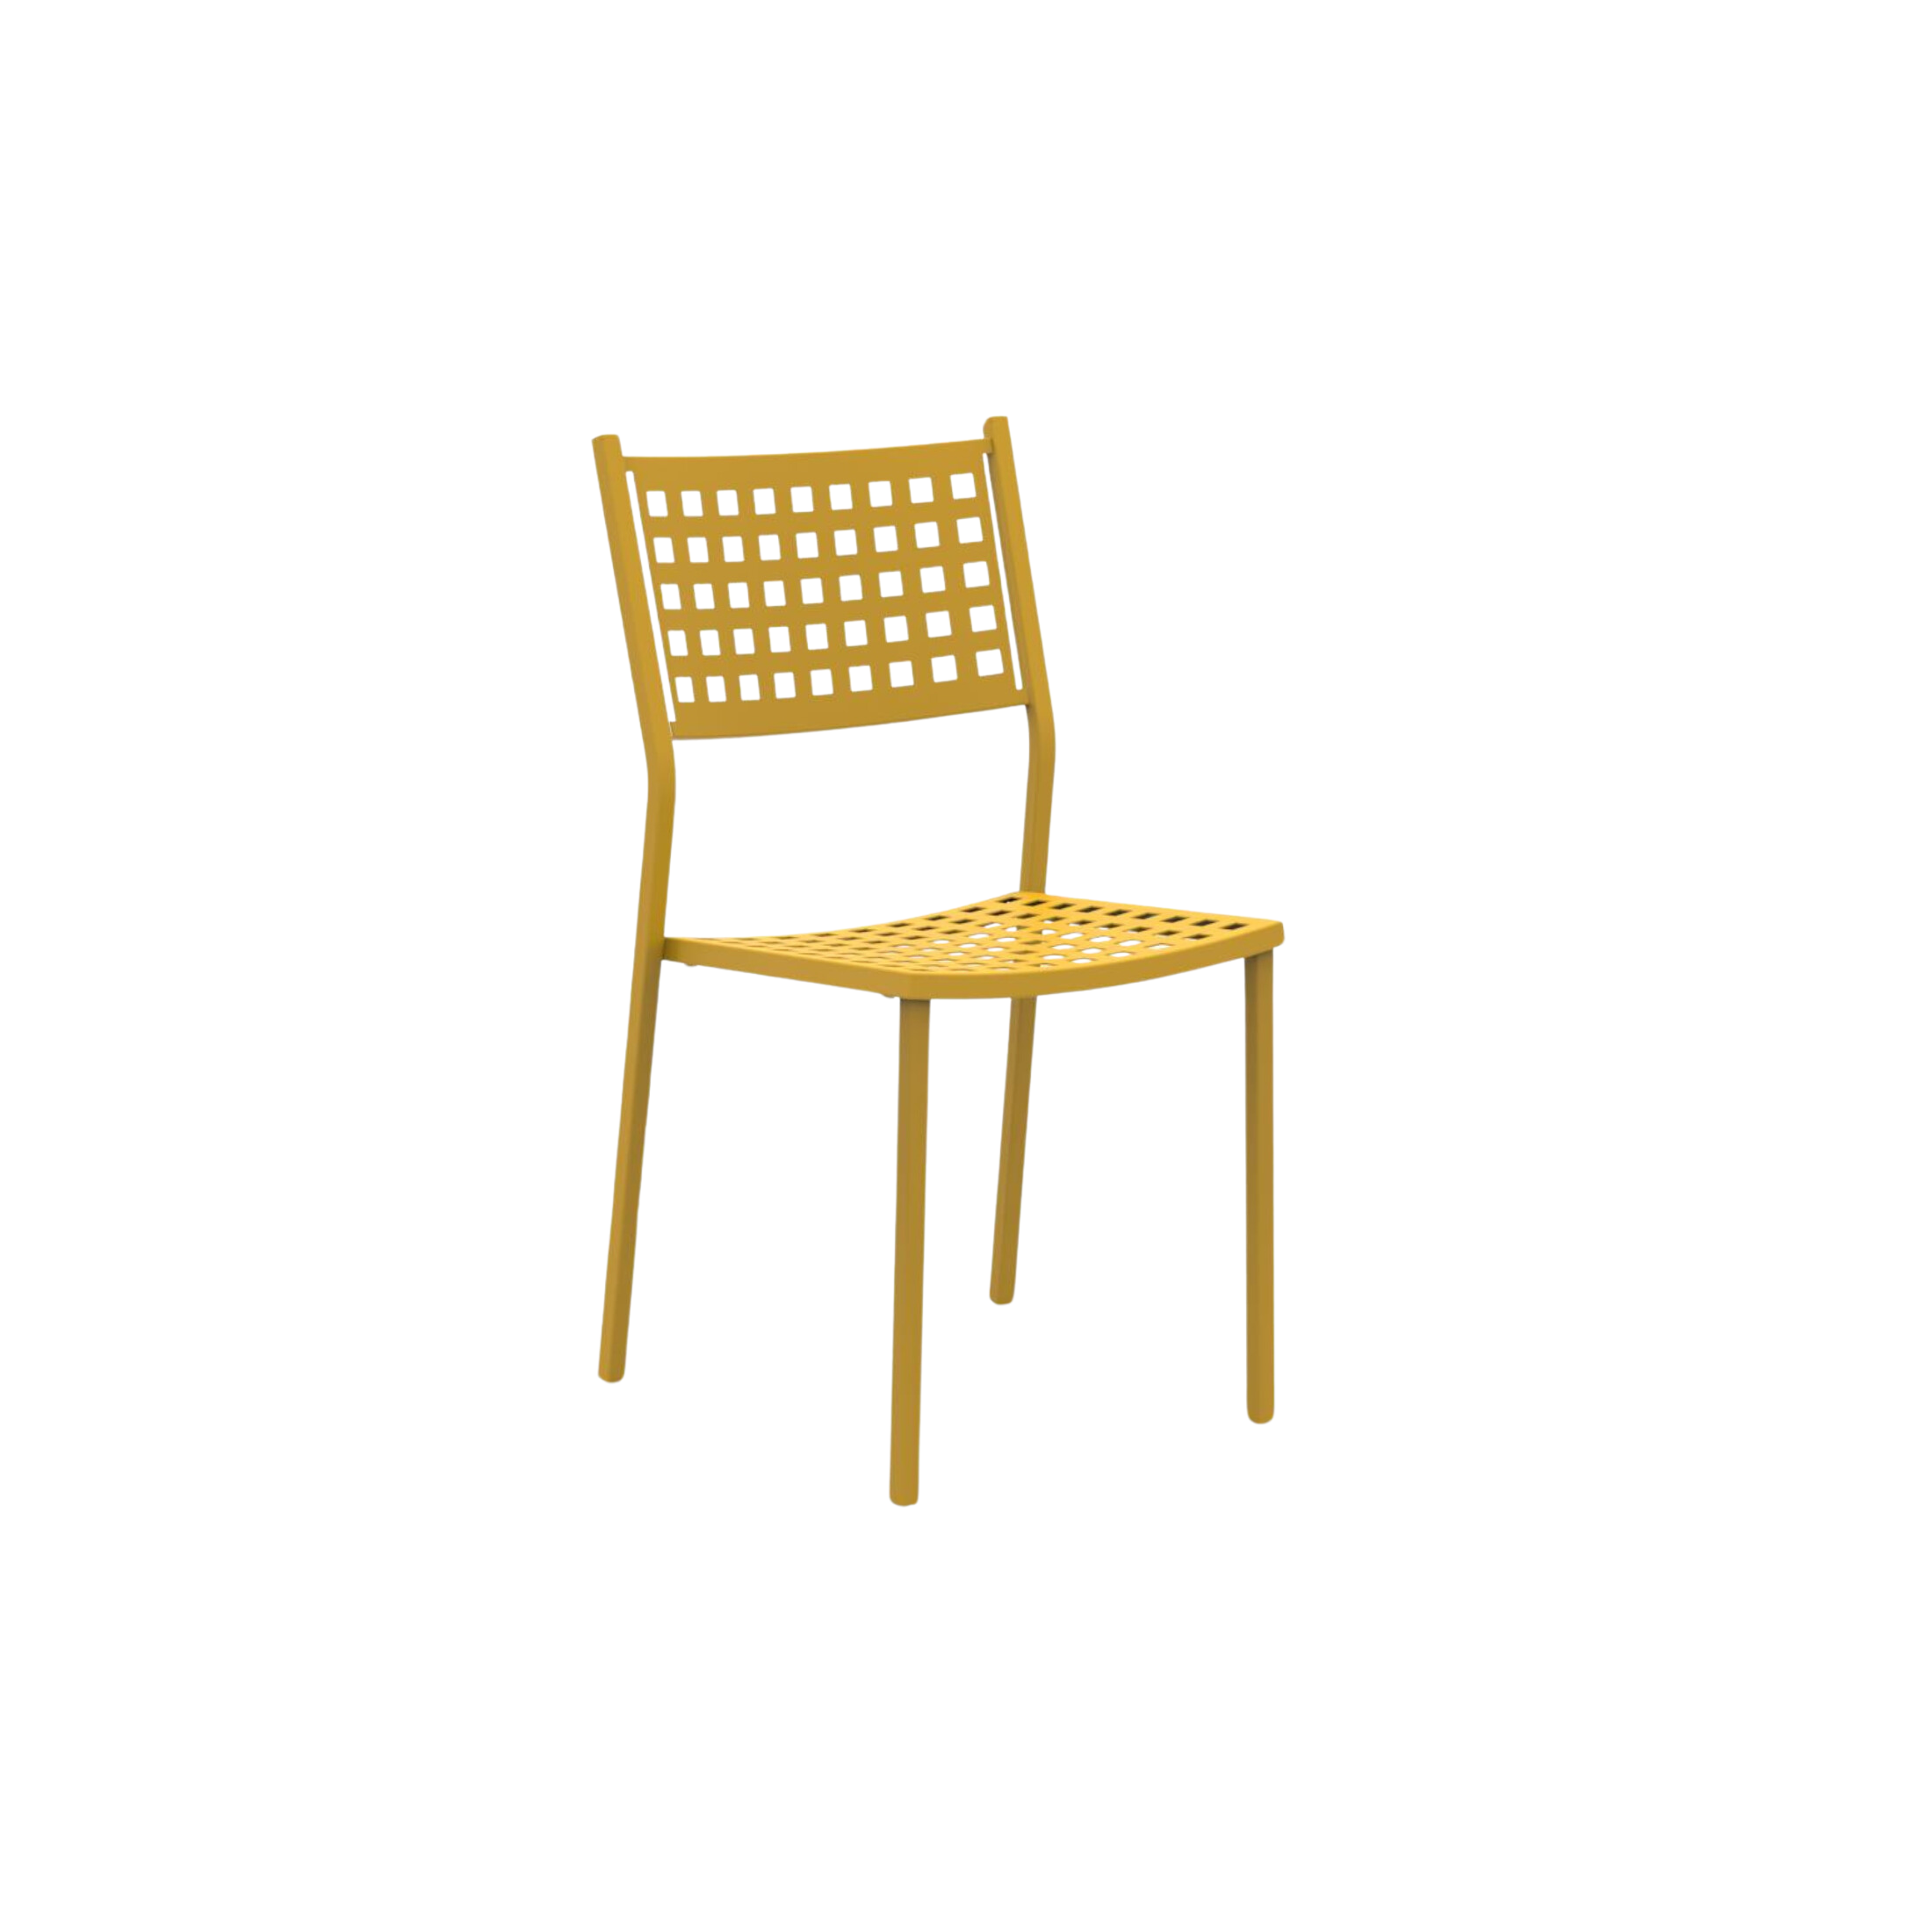 Set di sedie in metallo impilabili da giardino "Alice" senza braccioli cm 43x48 85h